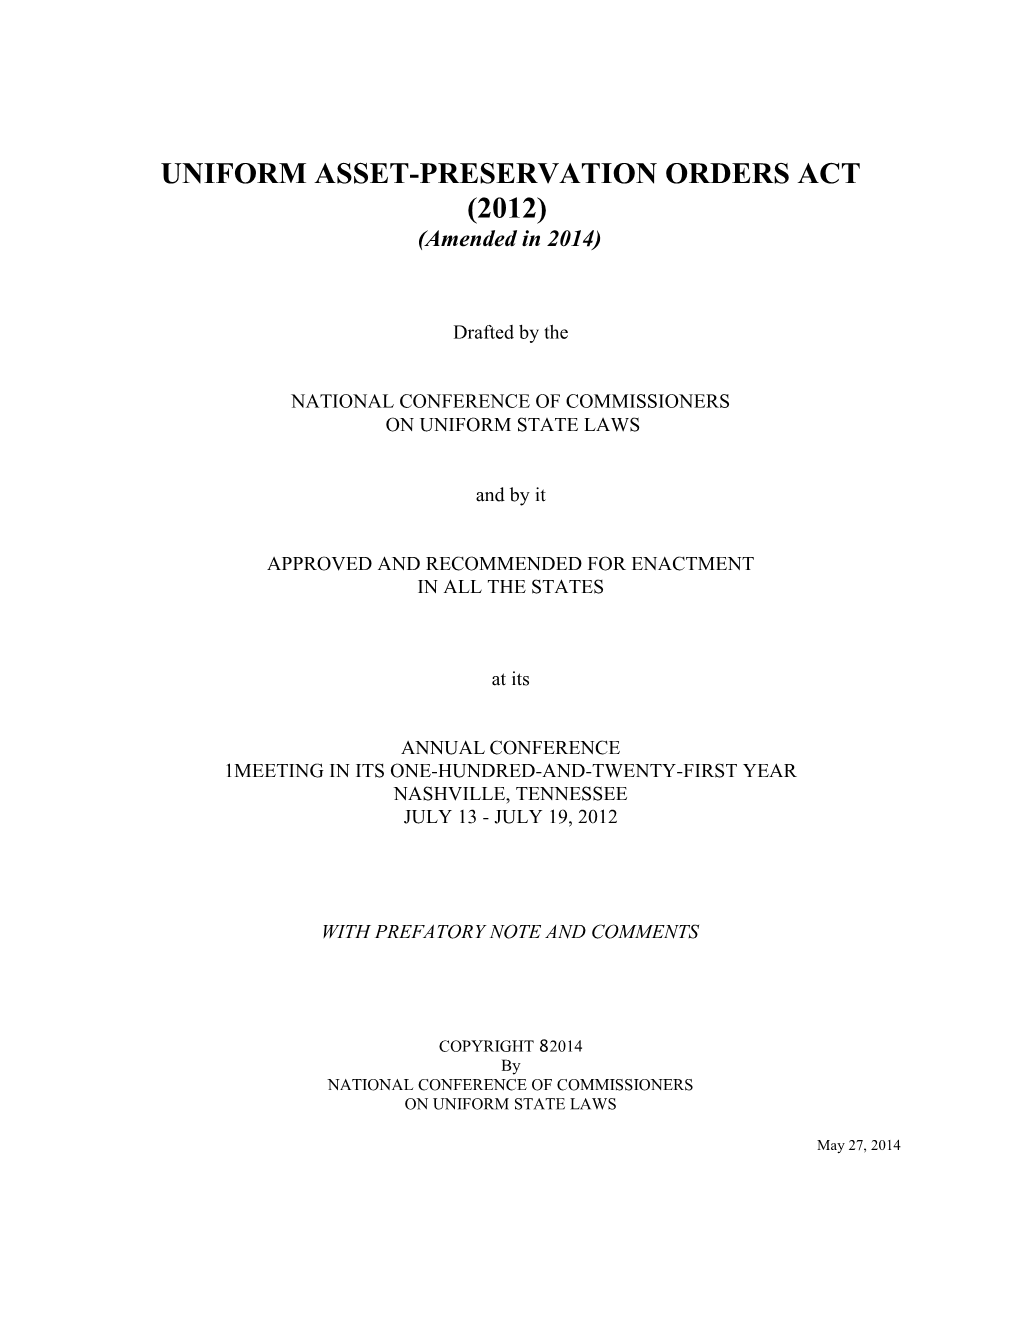 Uniform Asset-Preservation Orders Act (2012)